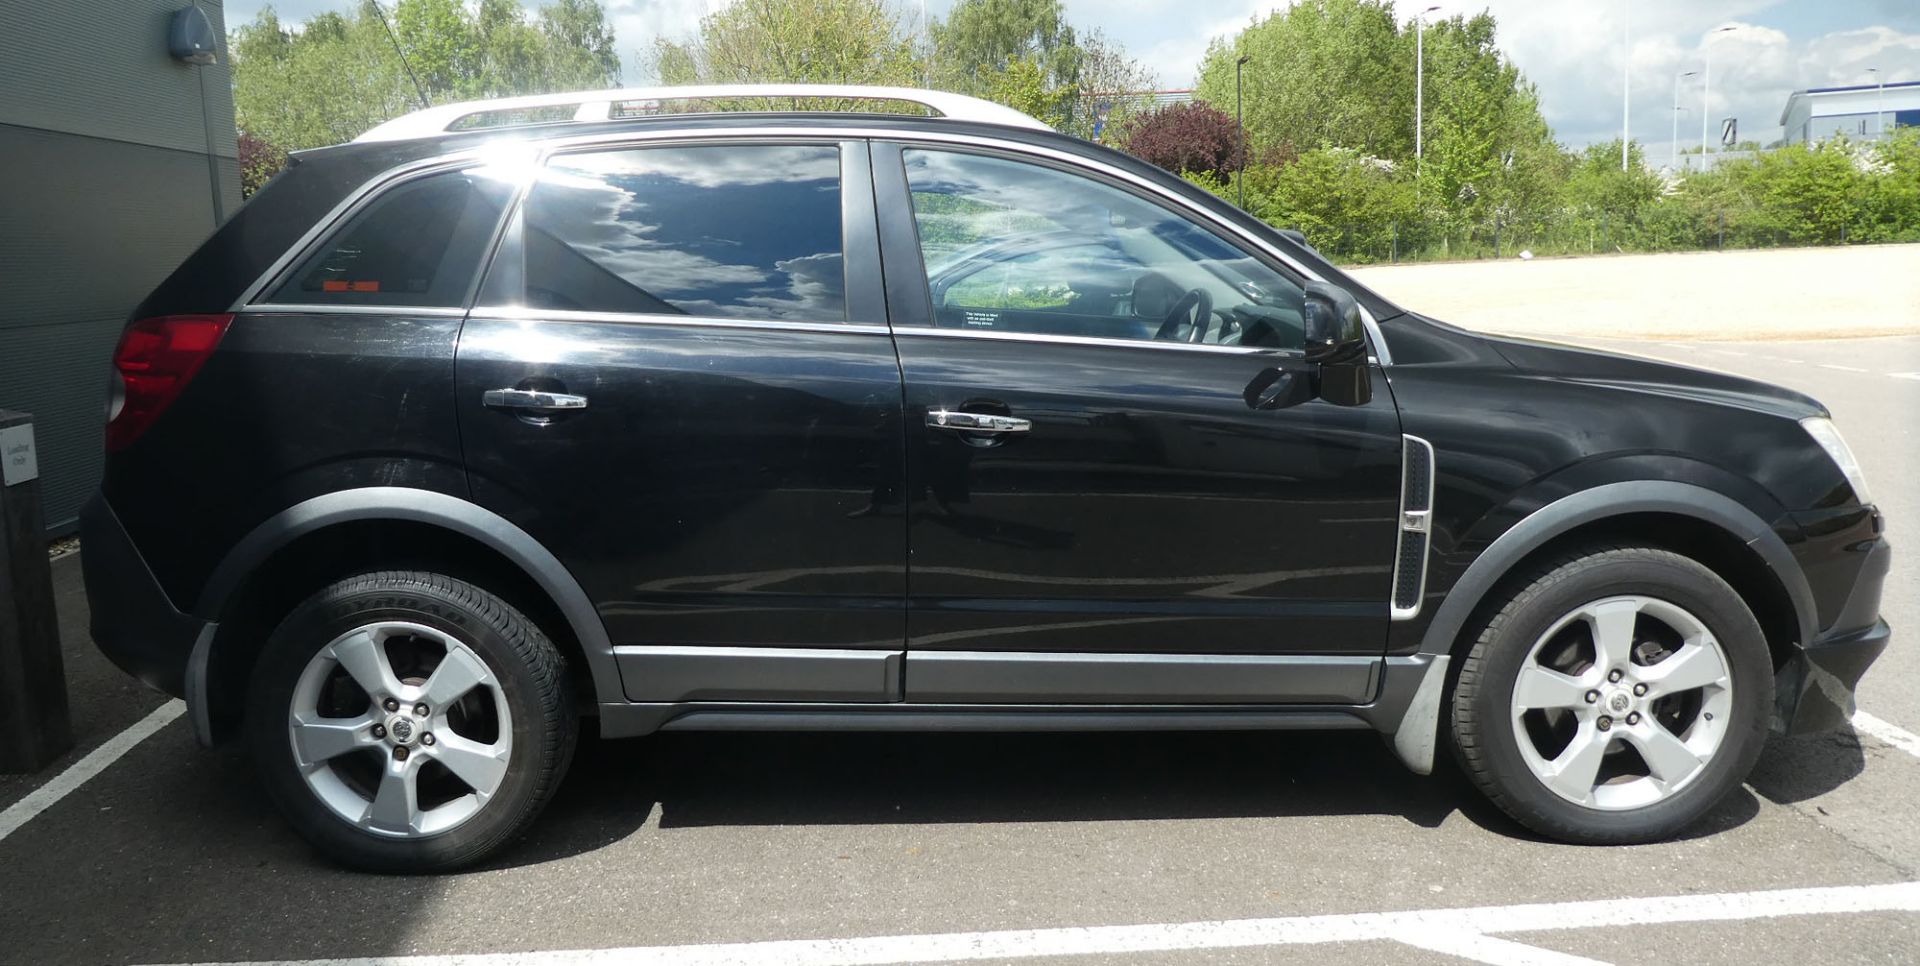 Vauxhall Antara SE CDTI in black, registration plate VO57 BLK, first registered 01.09.2007, 5 door - Image 10 of 10